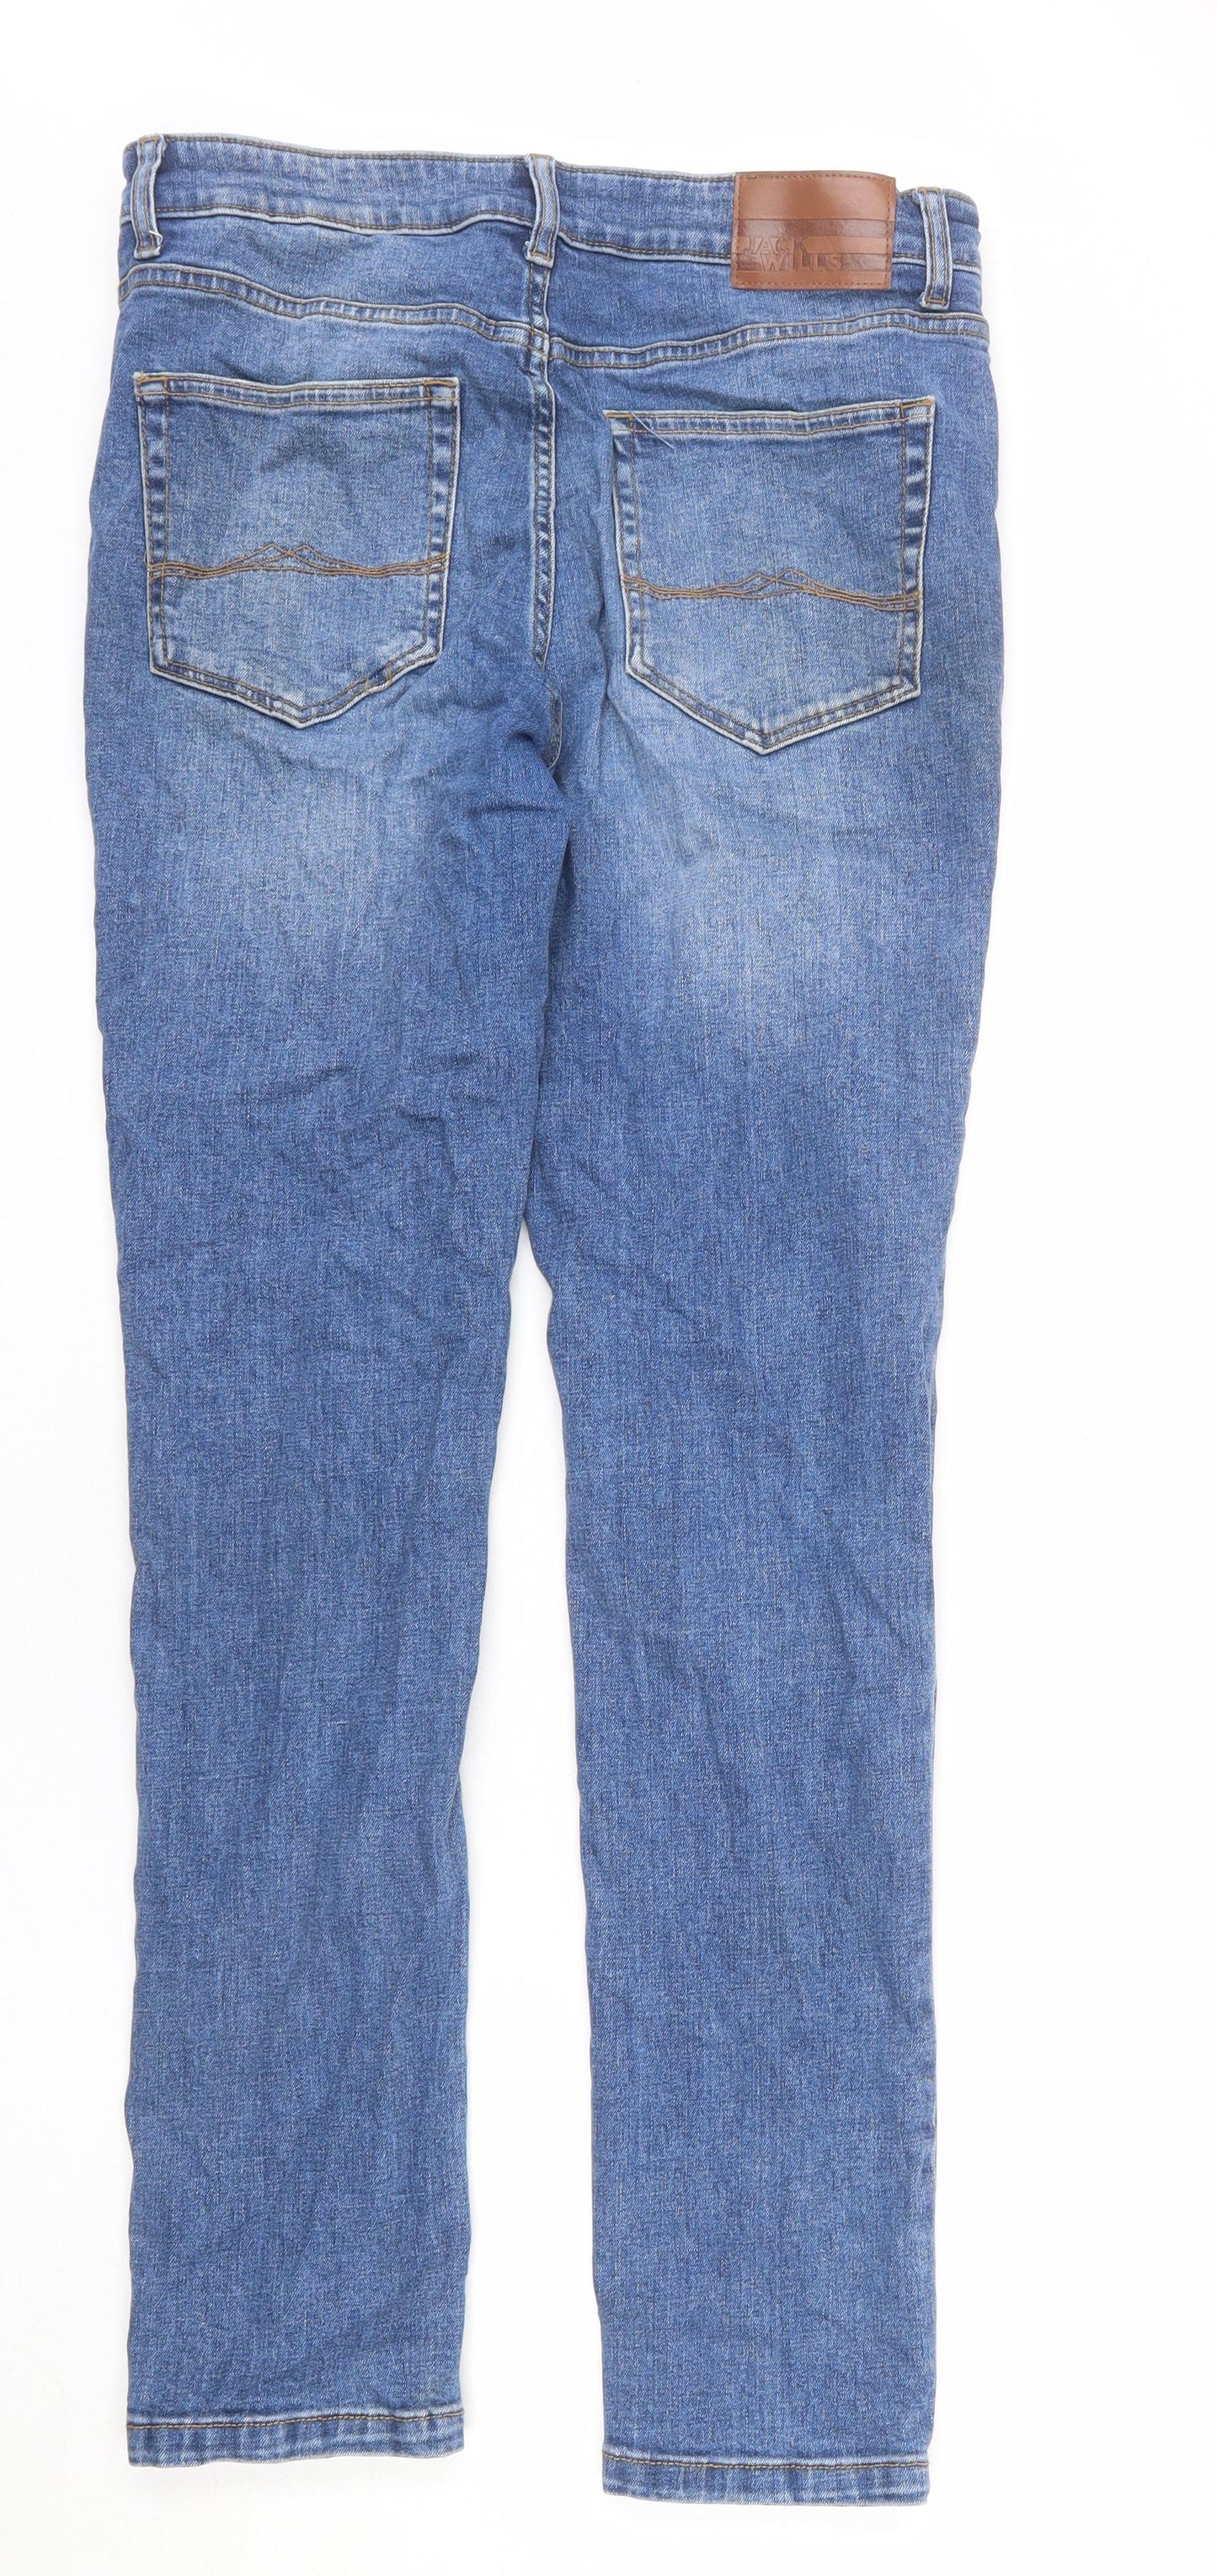 Jack Wills Mens Blue Cotton Skinny Jeans Size 32 in L31 in Regular Zip